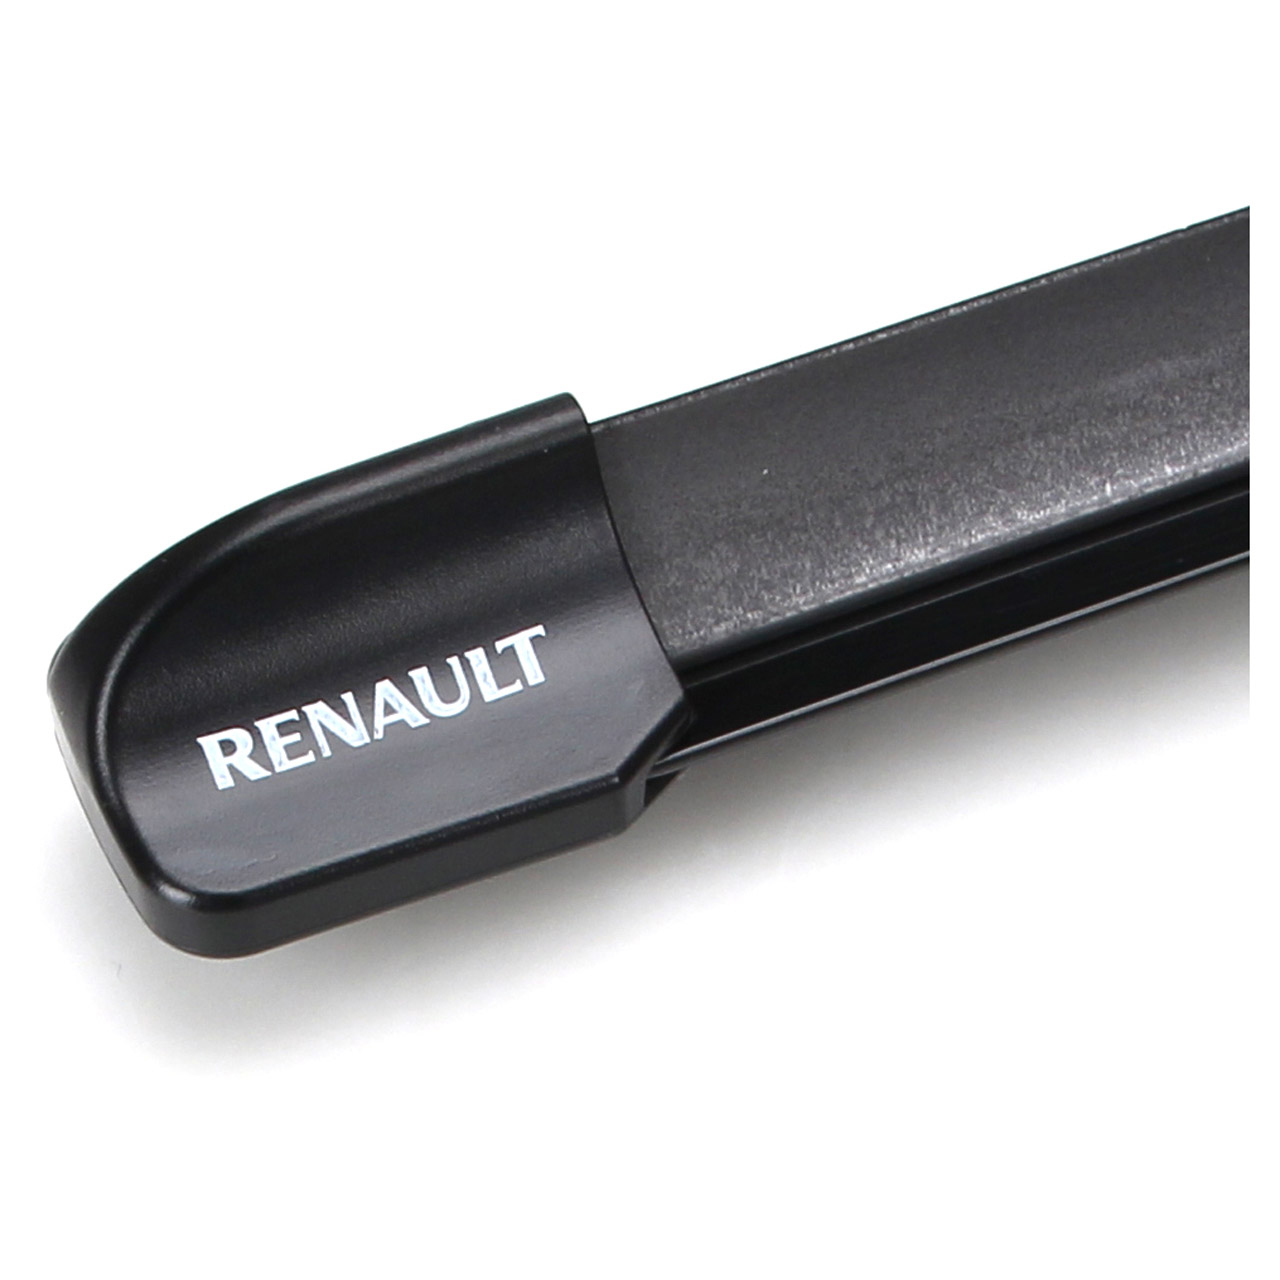 ORIGINAL Renault Scheibenwischer Wischerblatt Heckwischer Clio III 7711422568